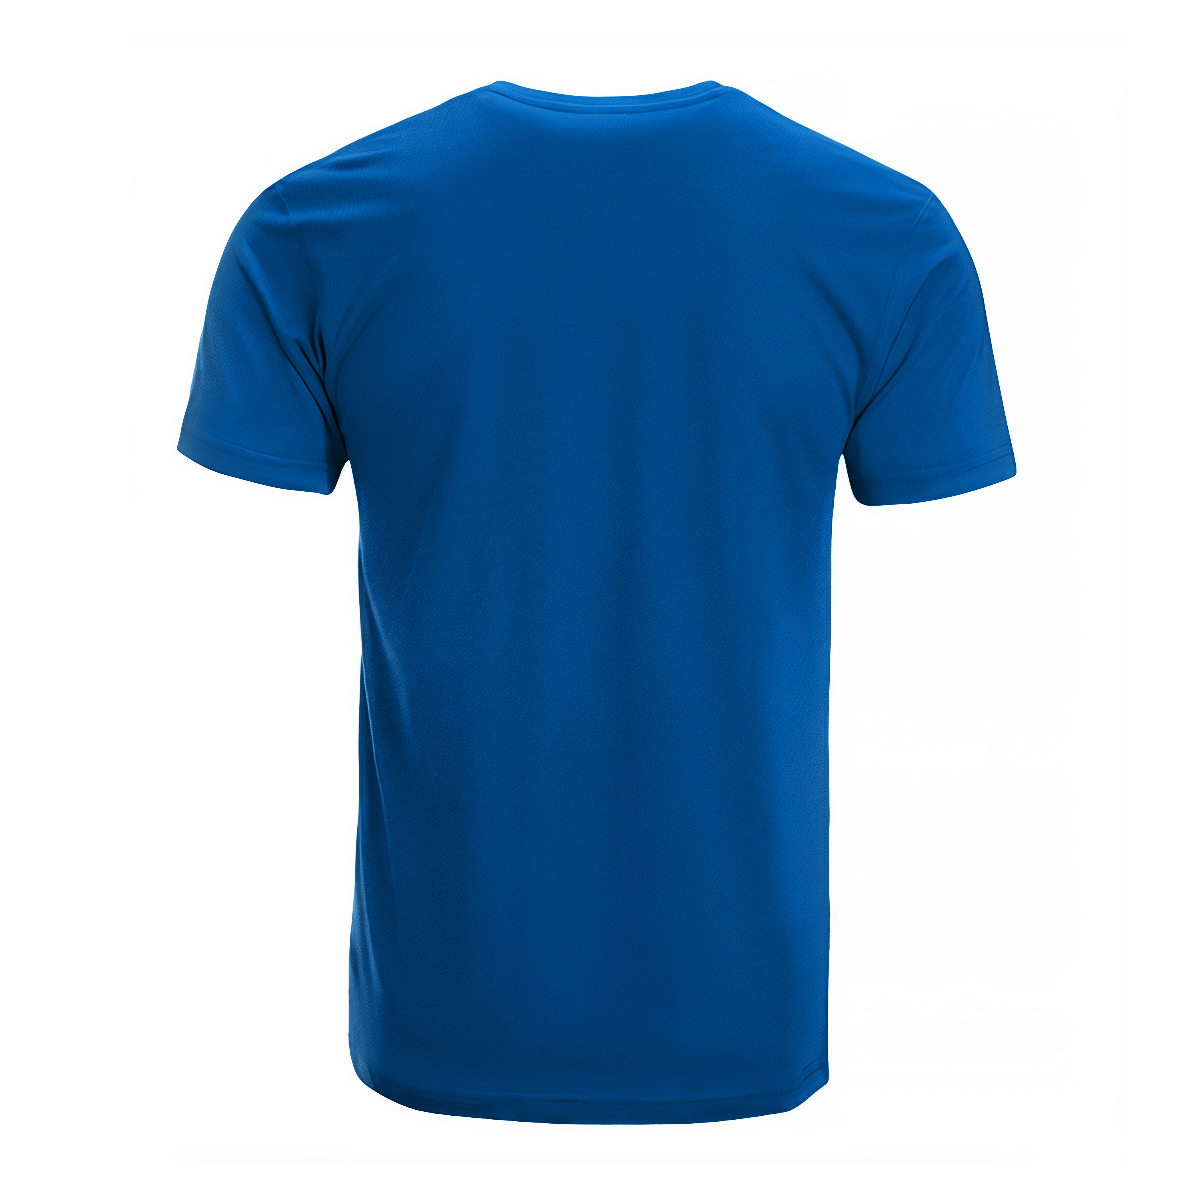 Galbraith Tartan Crest T-shirt - I'm not yelling style